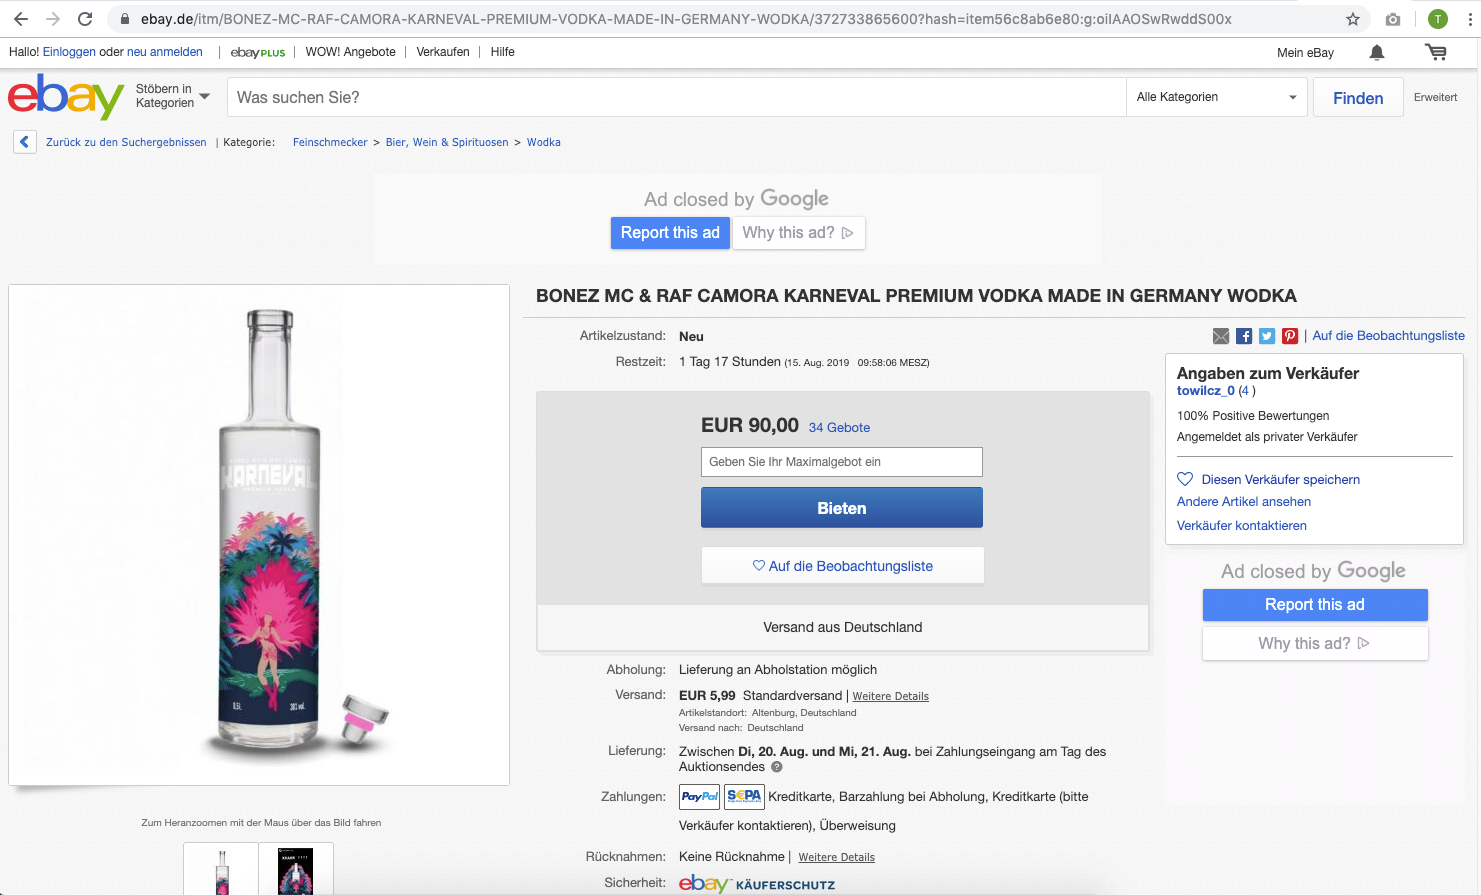 Karneval Vodka Bonez MC RAF Camora Ebay ausverkauft OMR